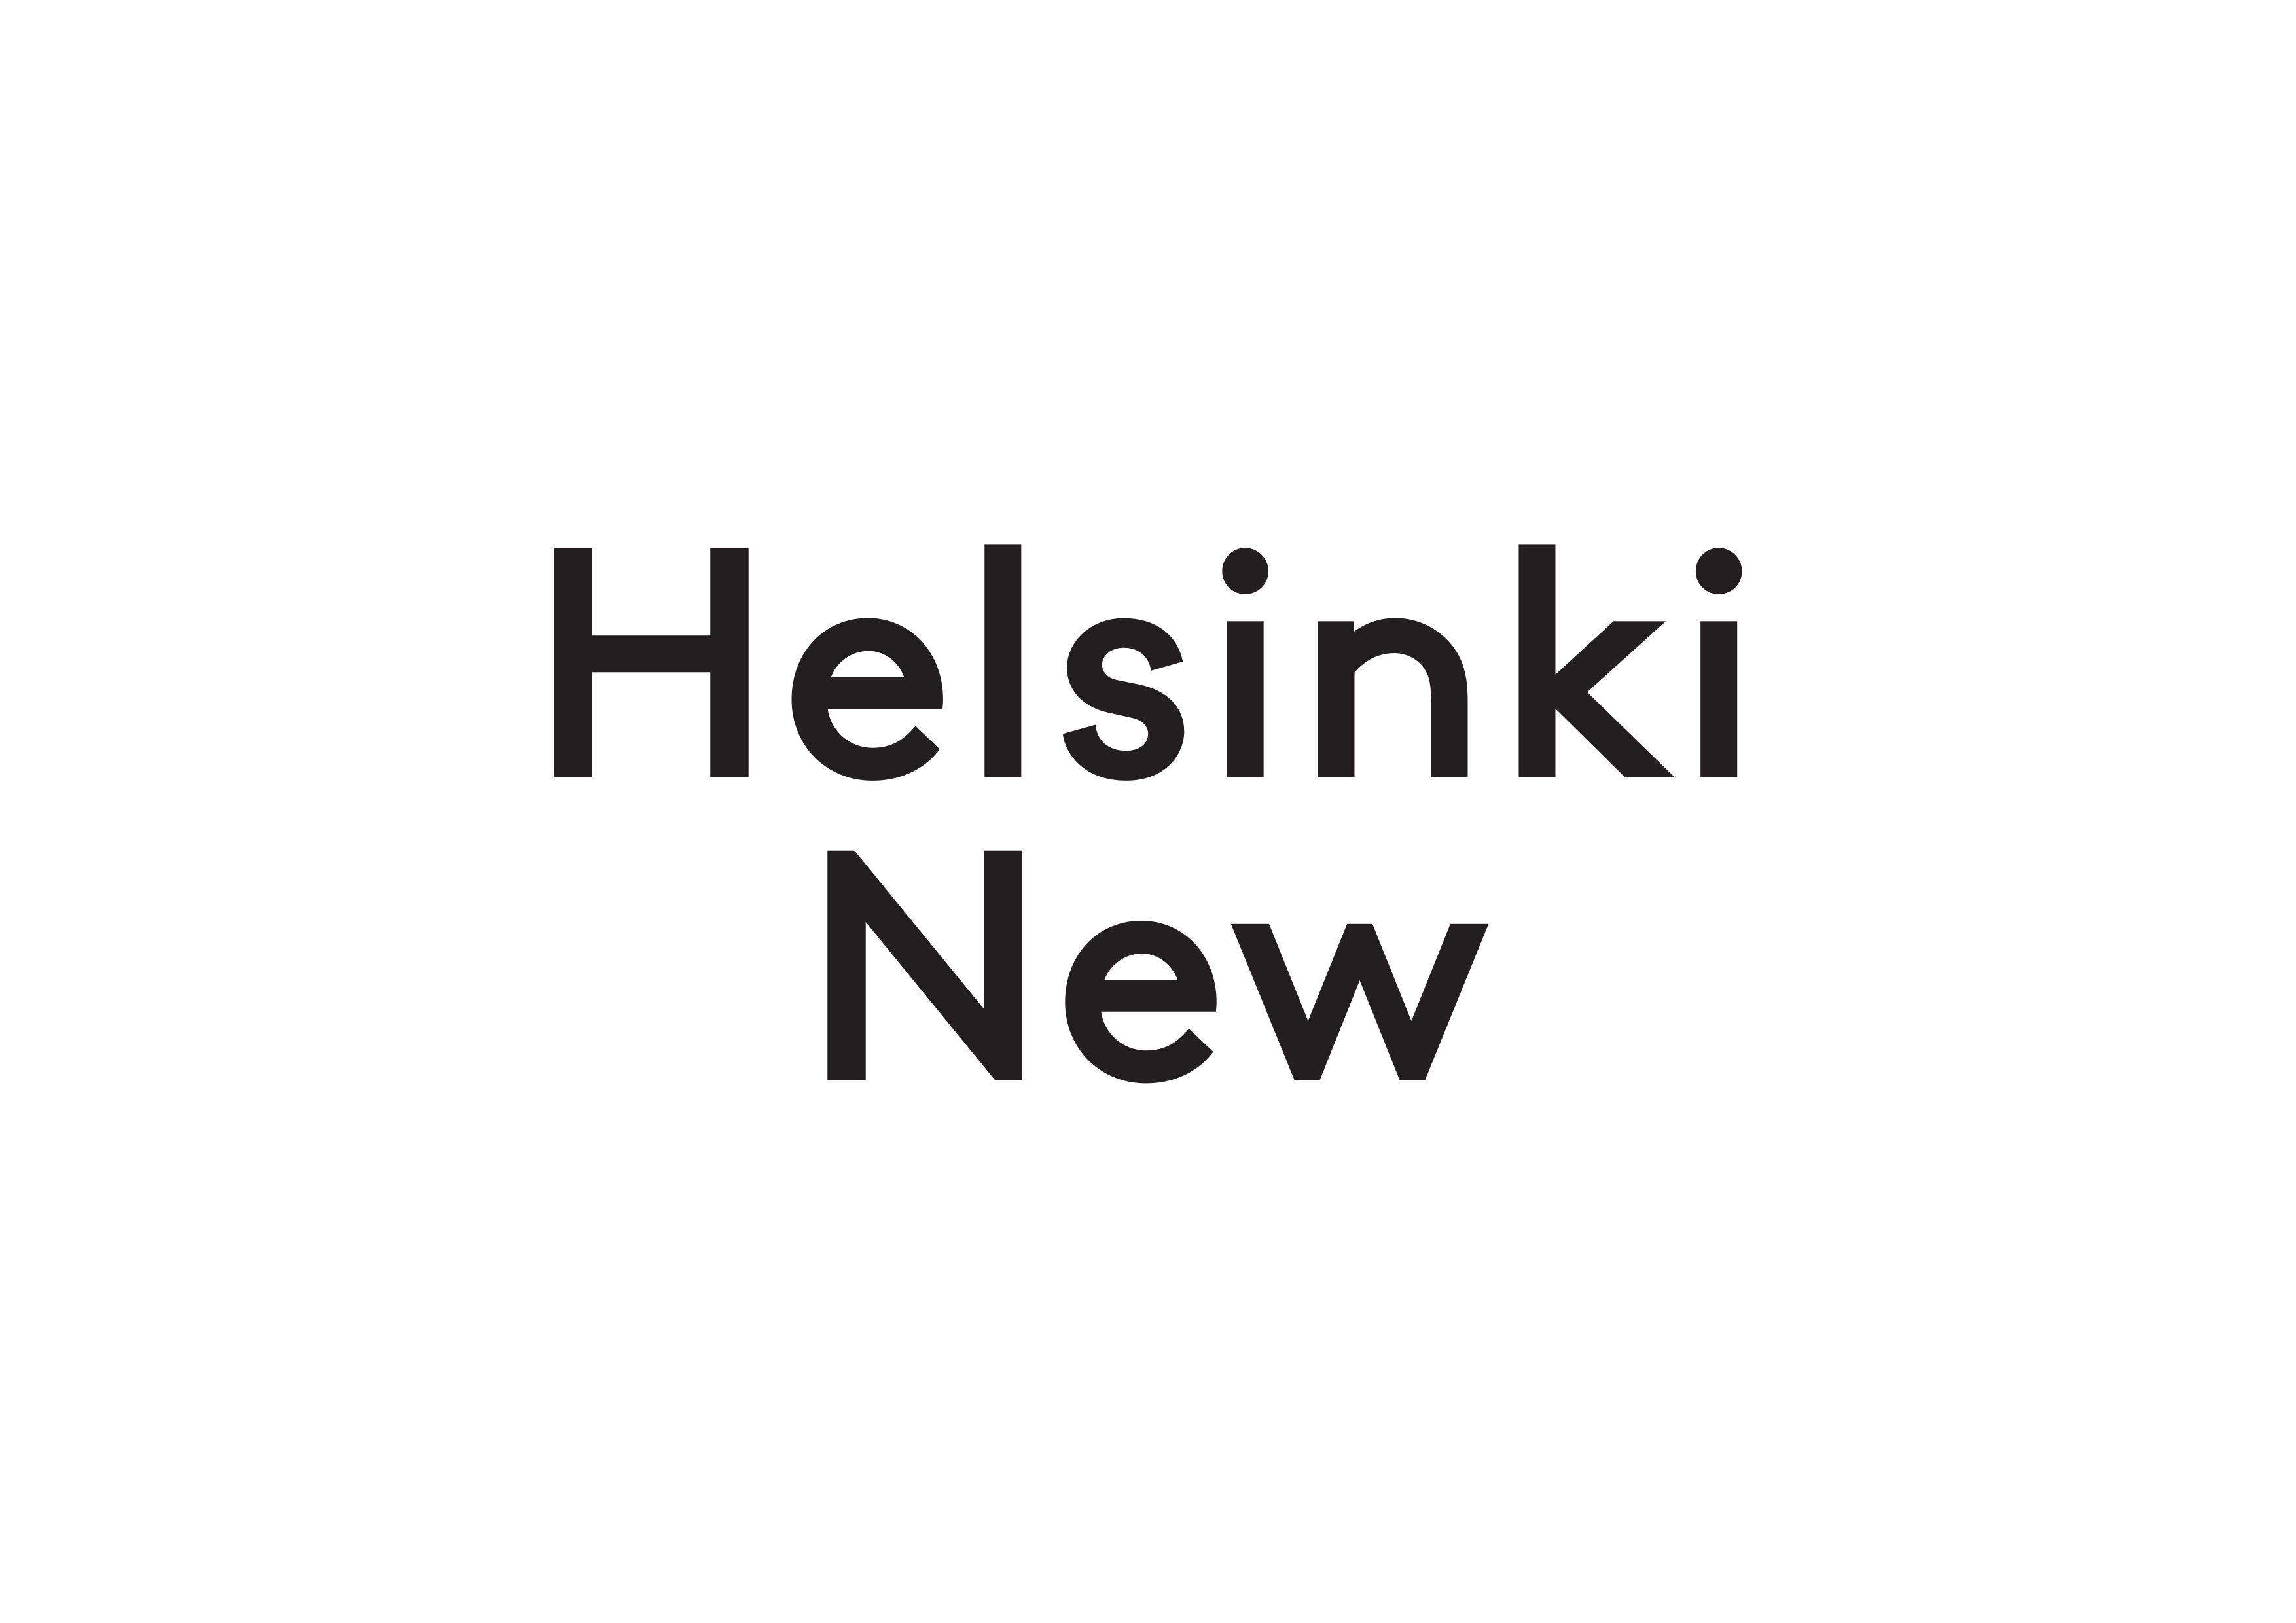 Helsinki new